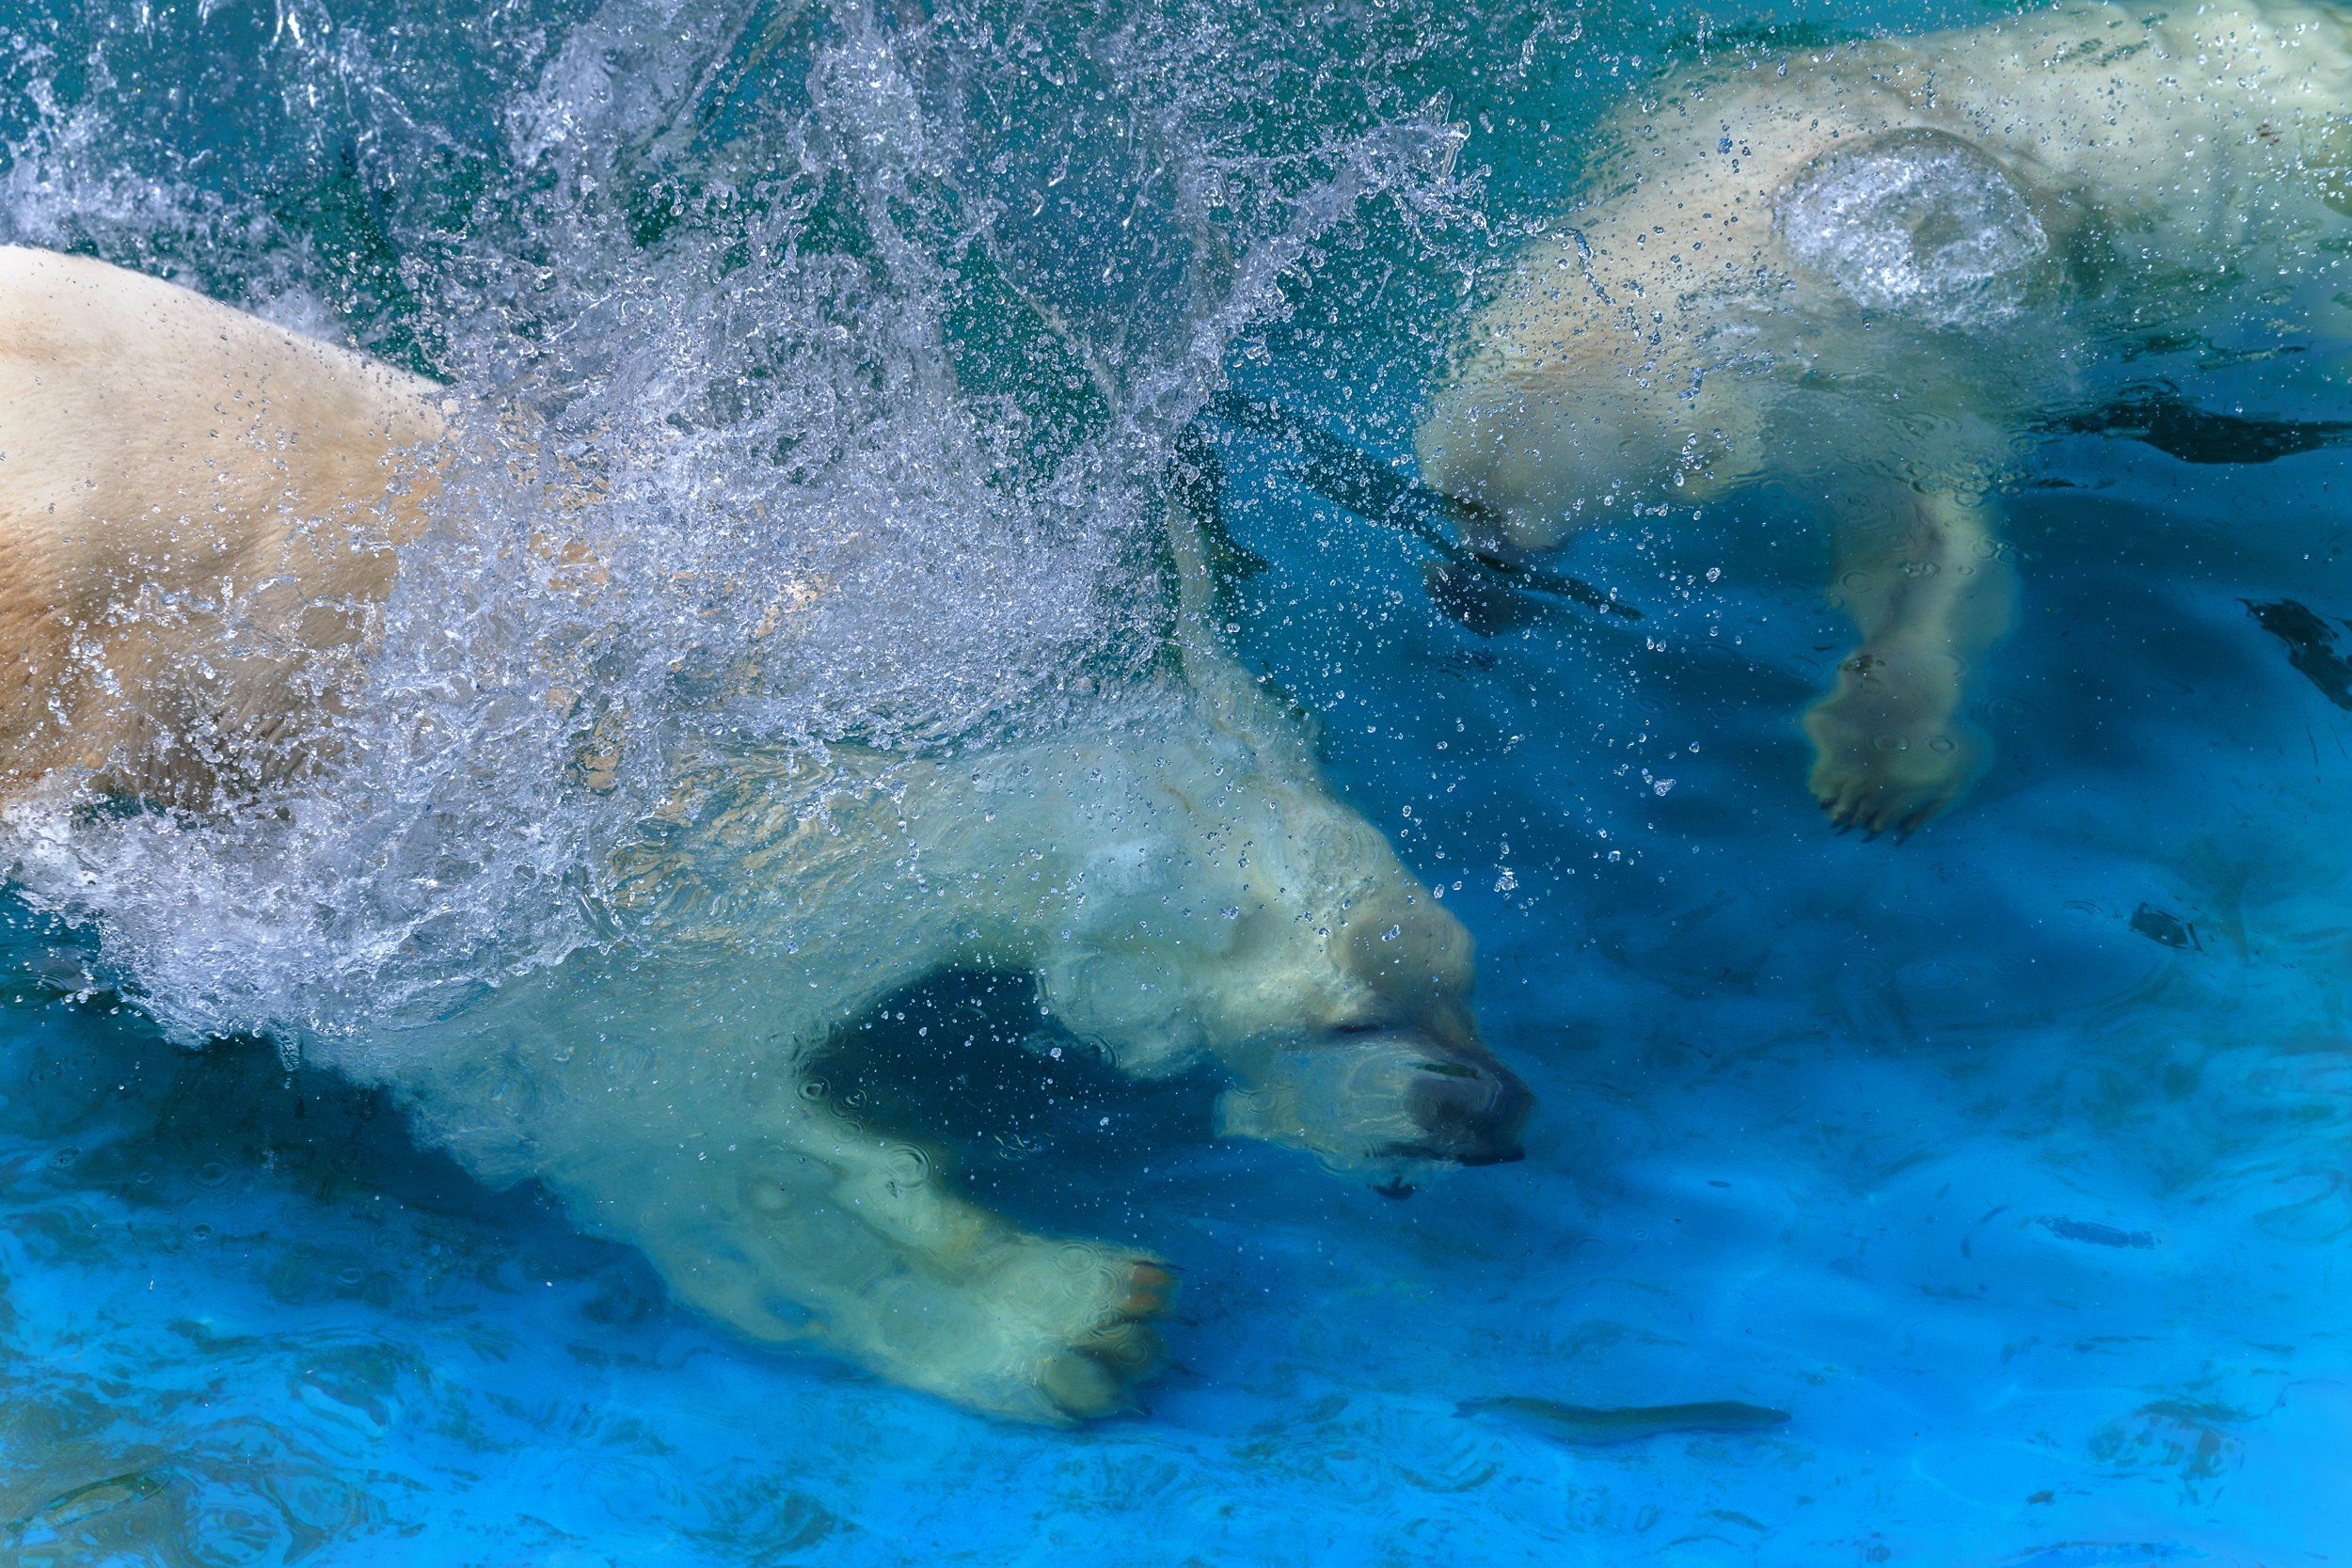 белые медведи, Олег Богданов